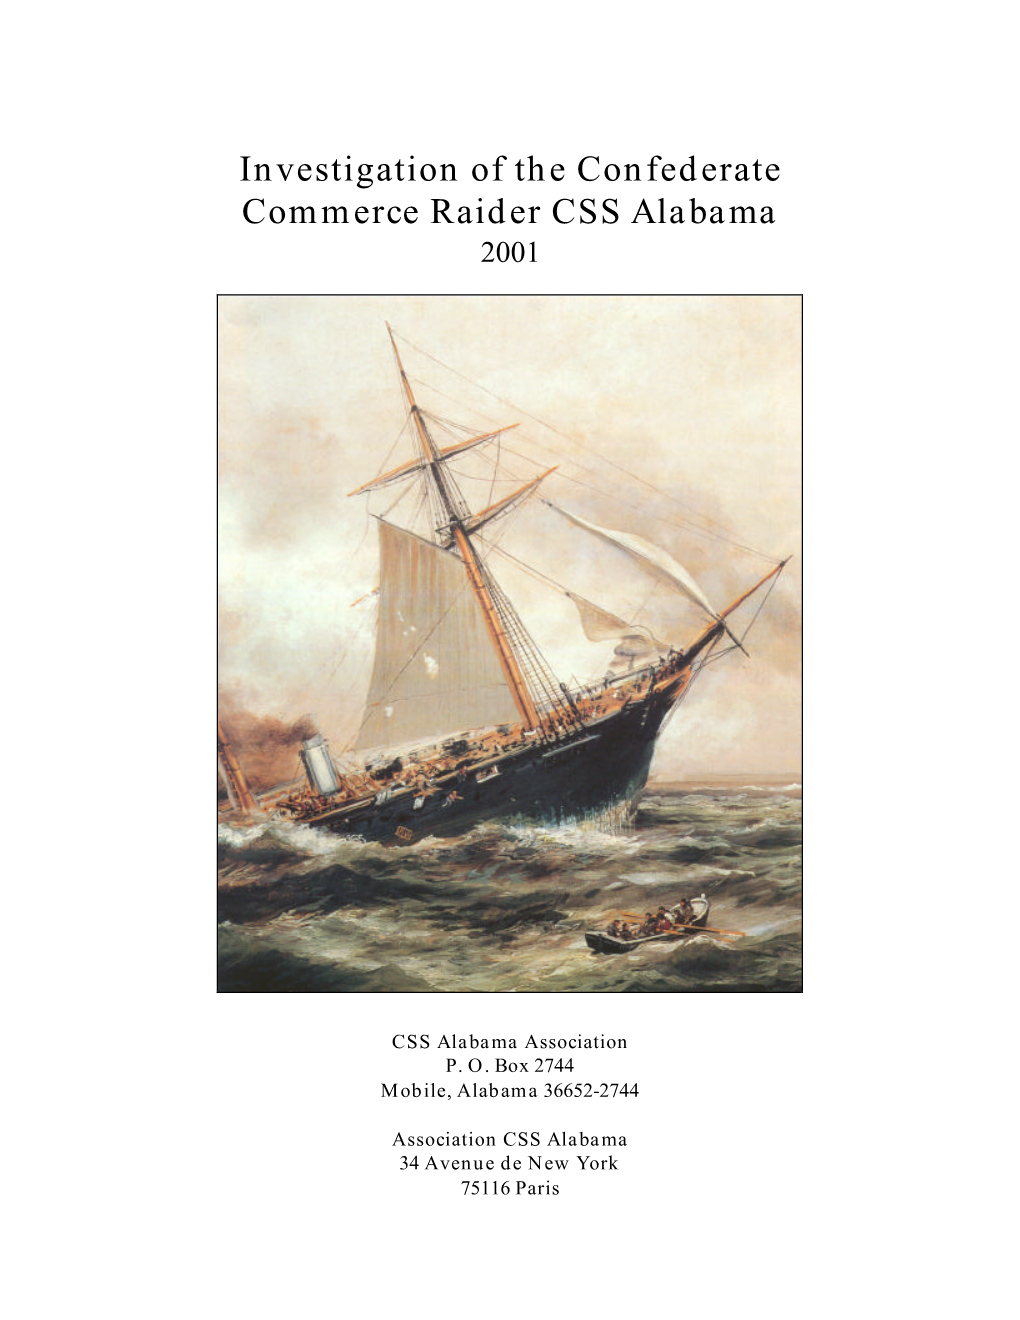 Investigation of the Confederate Commerce Raider CSS Alabama 2001